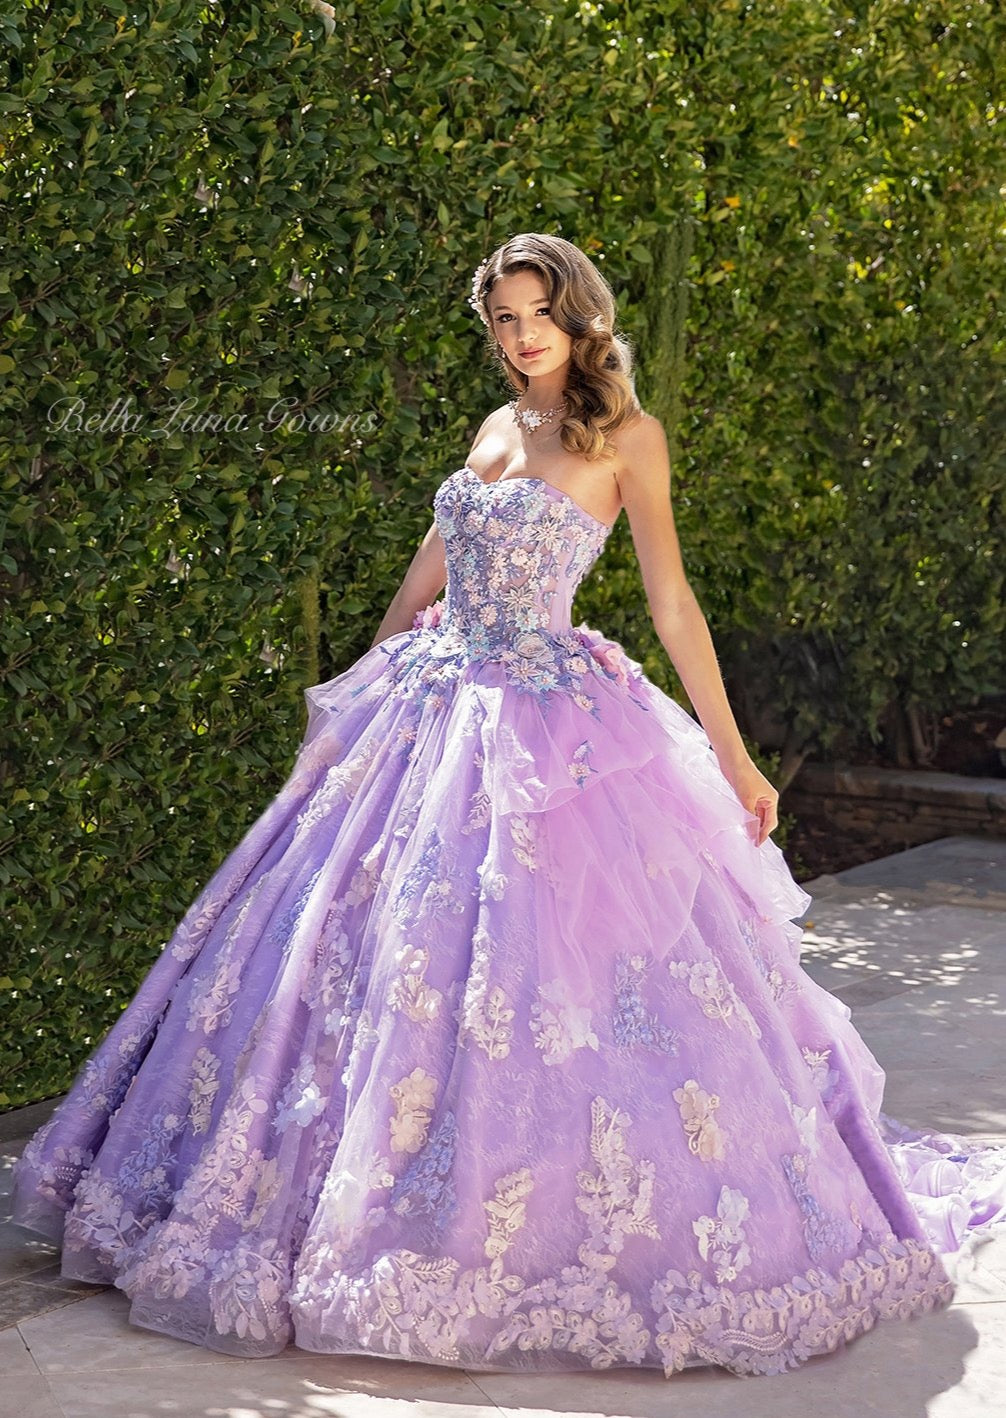 Lavender Dream - Bella Luna Gowns